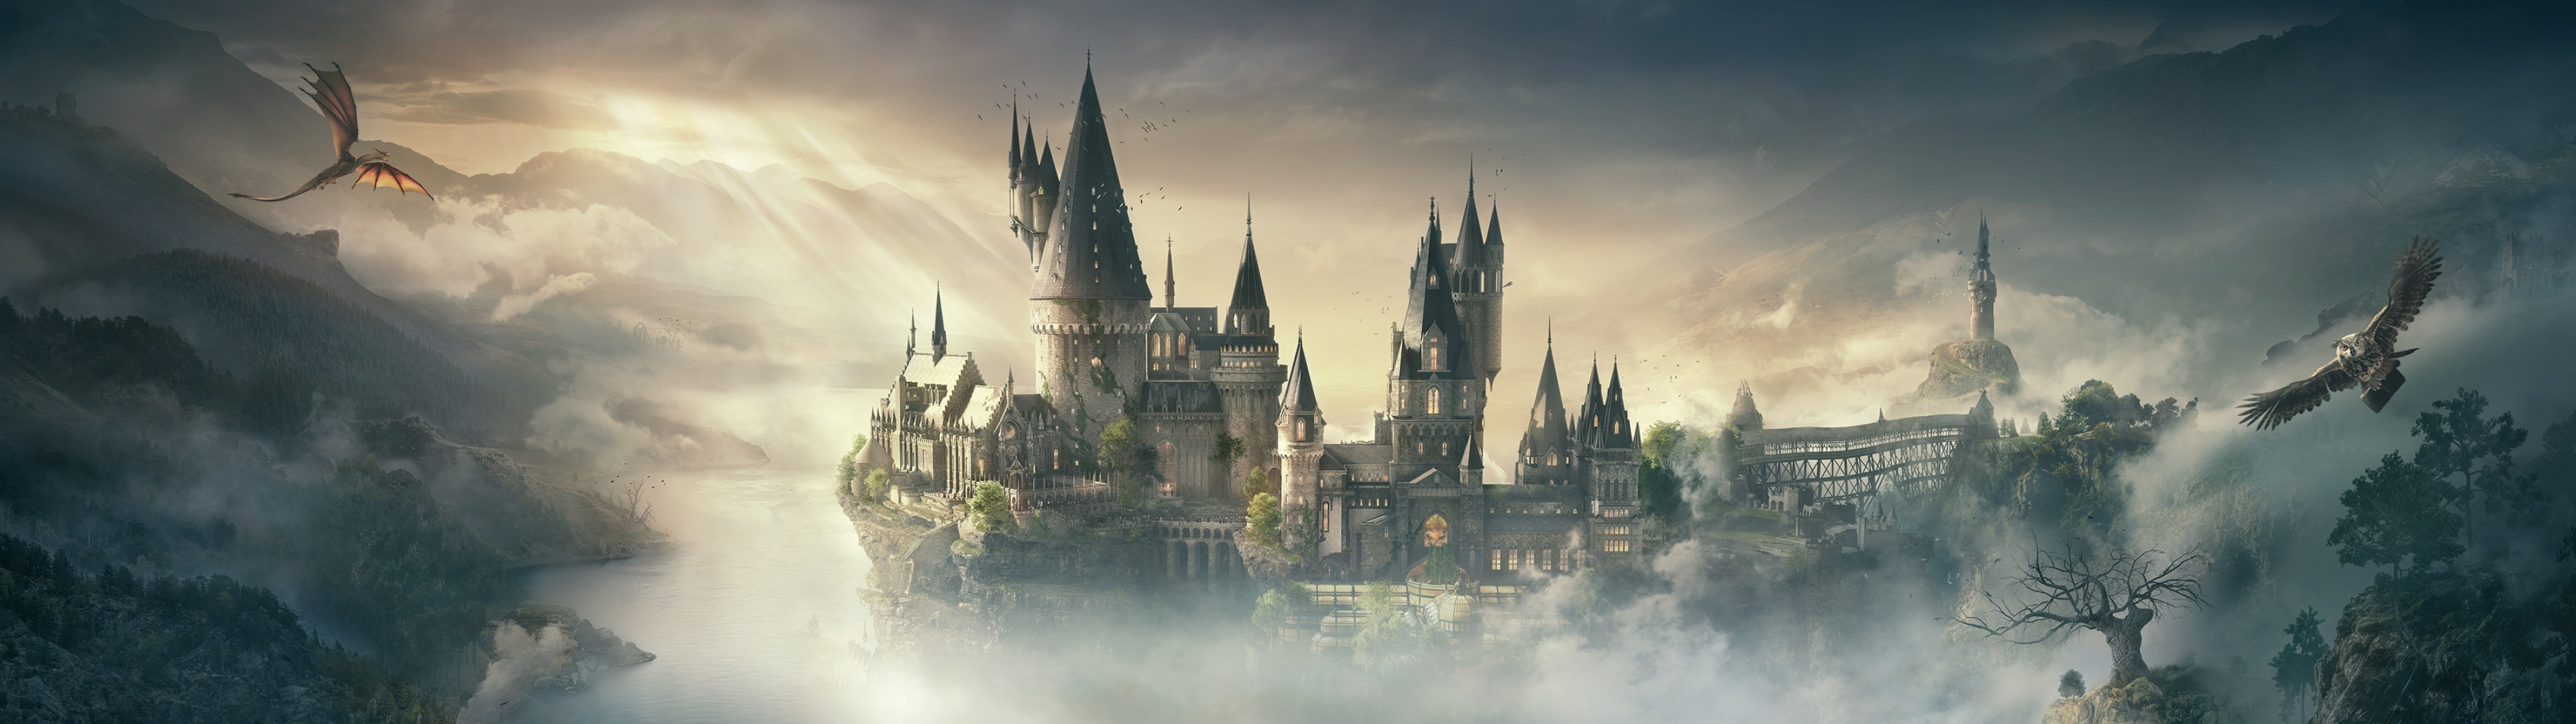 Hogwarts, Dual screen wallpapers, Wizarding wonders, Hogwarts magic, 3840x1080 Dual Screen Desktop